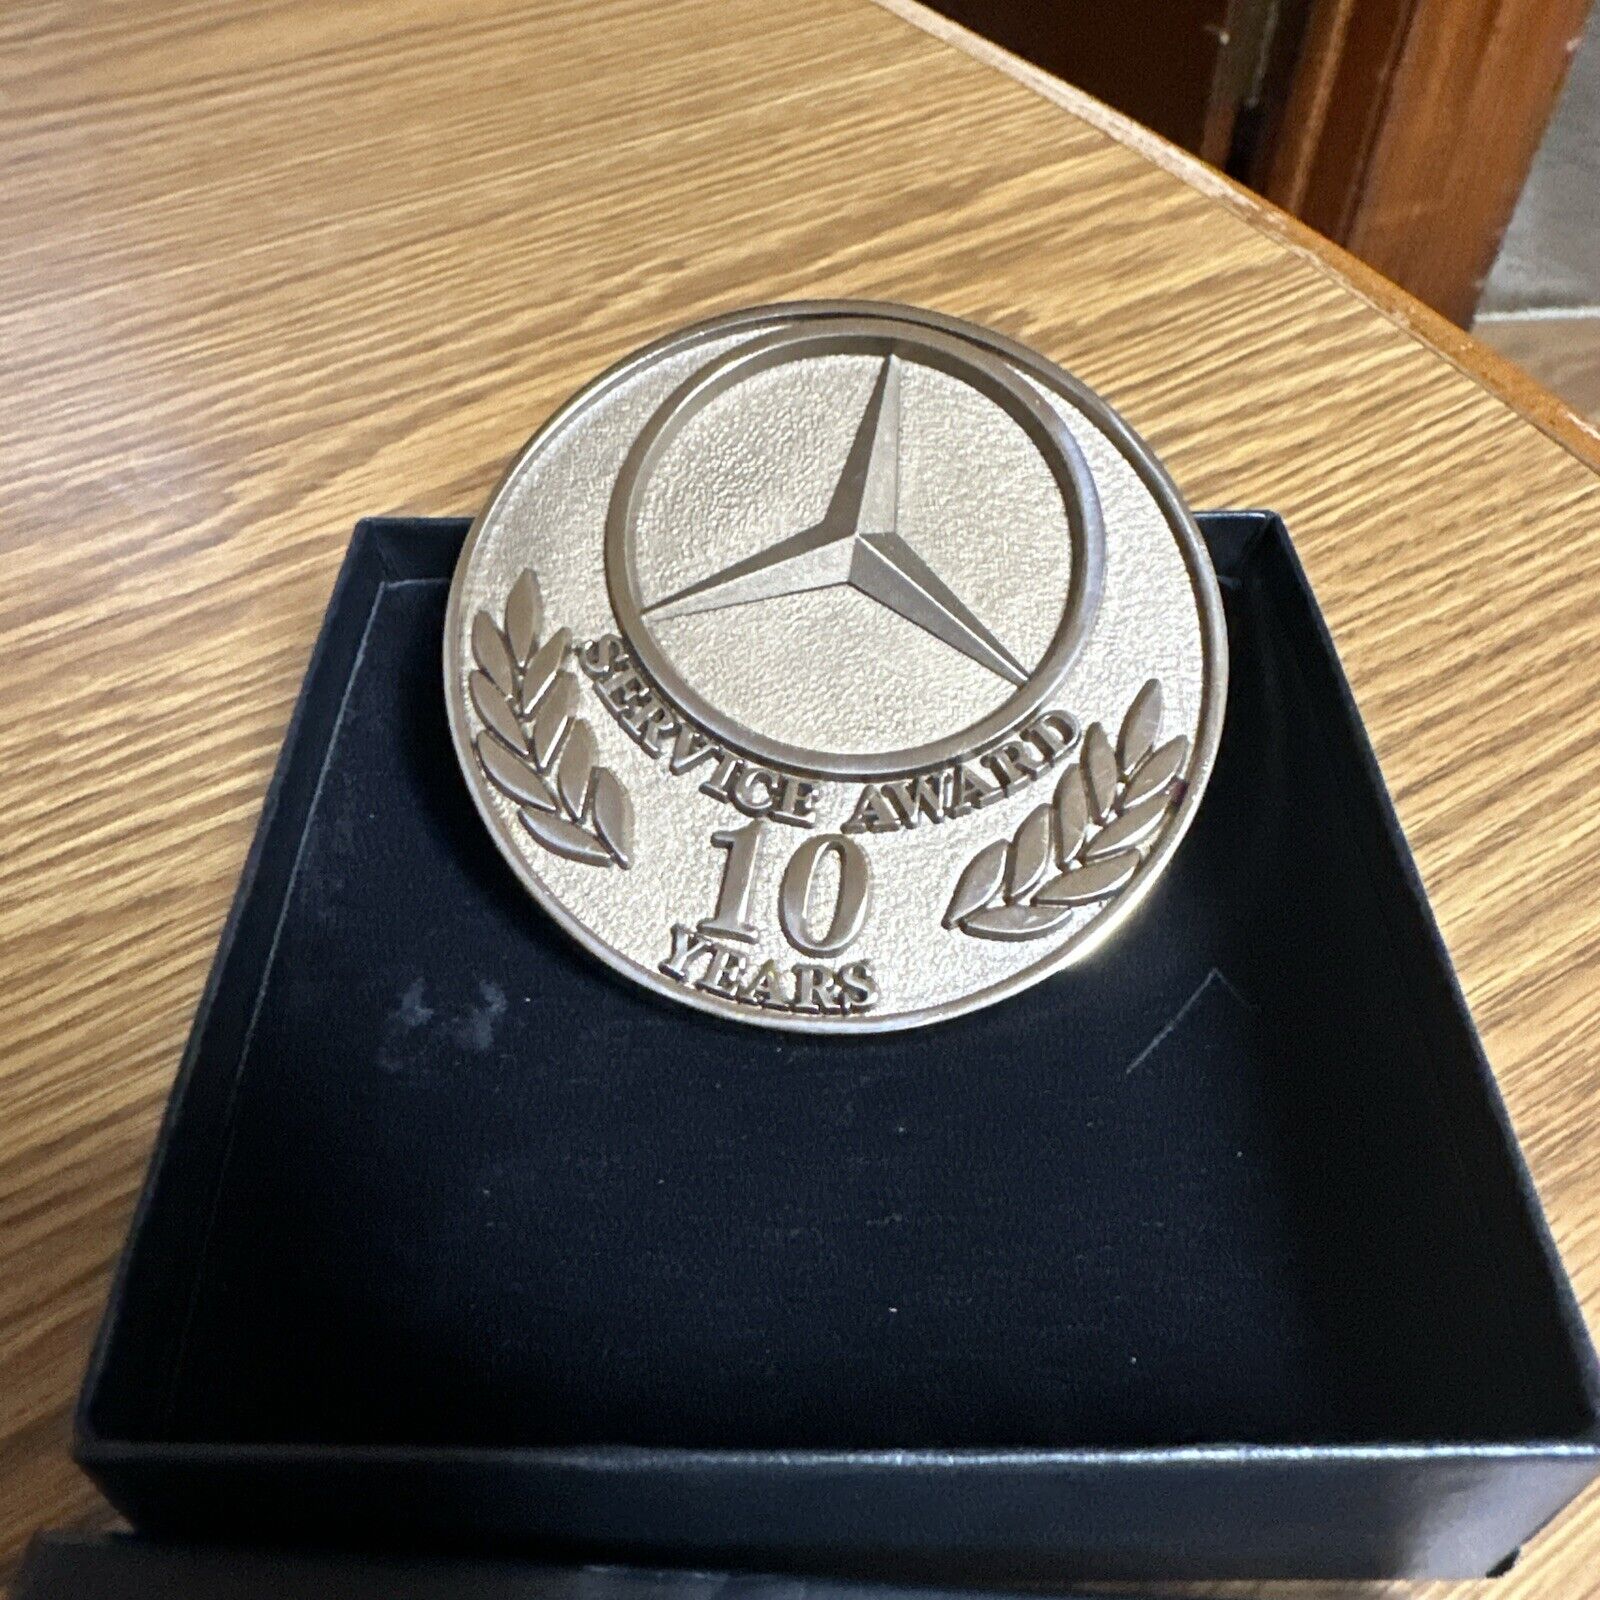 Mercedes Benz Auto Mechanic Service  Award 10 Years.